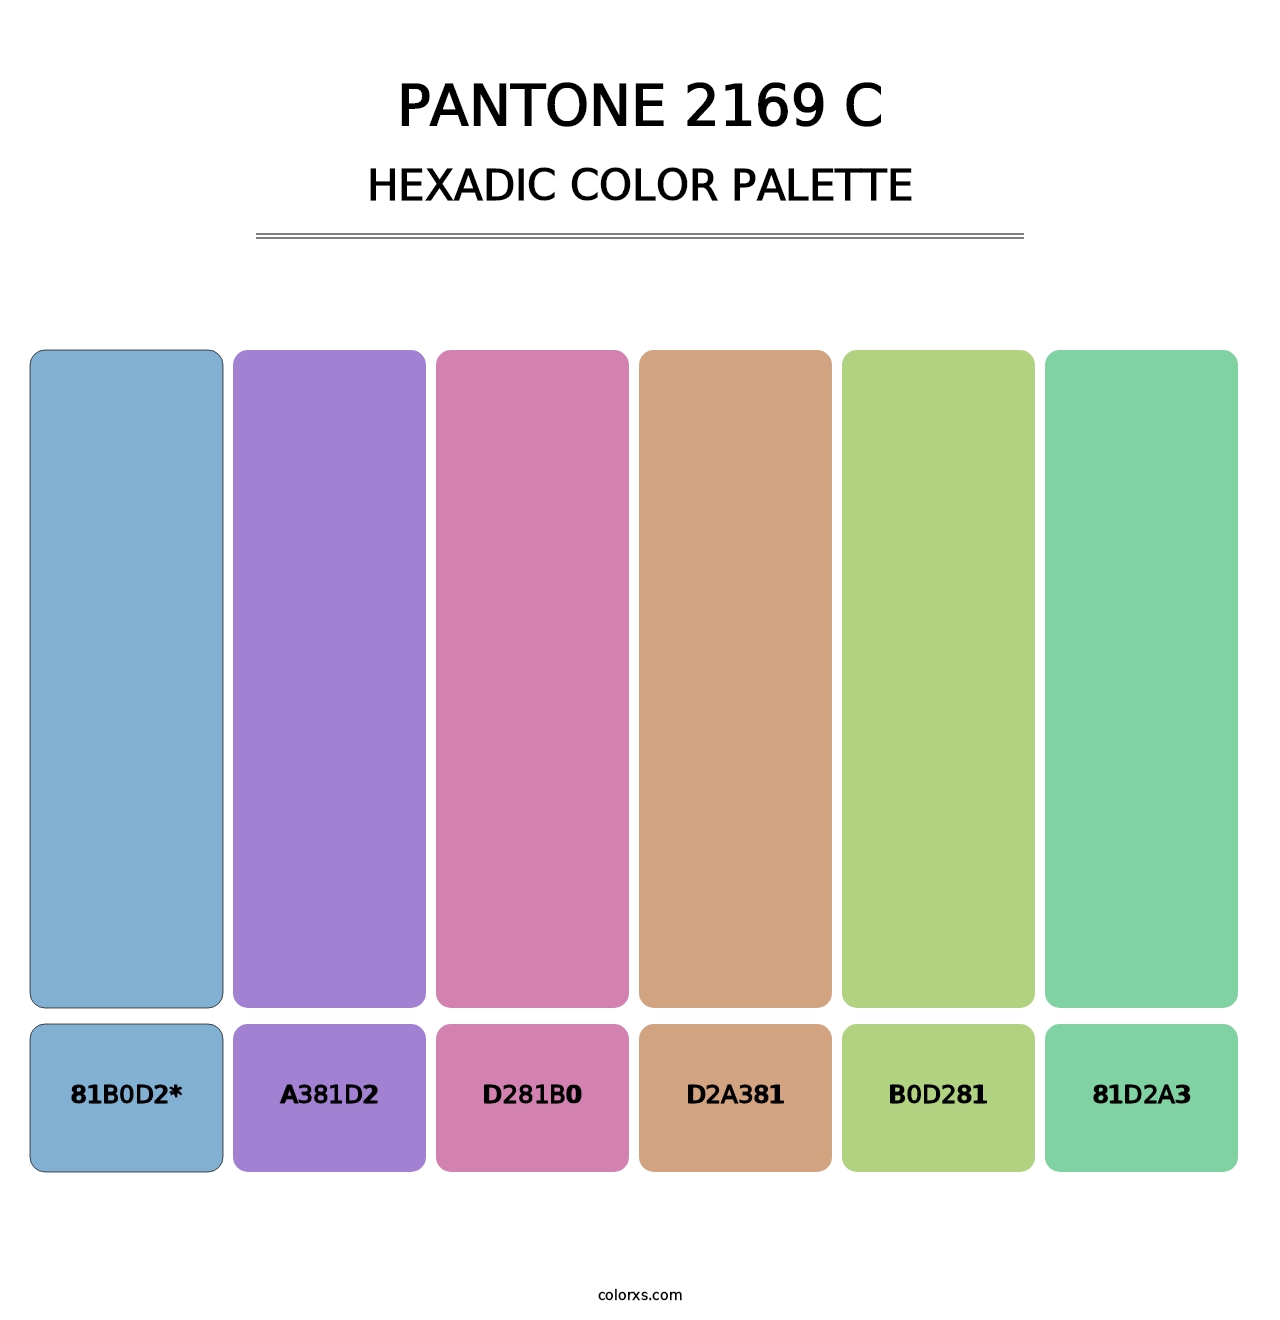 PANTONE 2169 C - Hexadic Color Palette